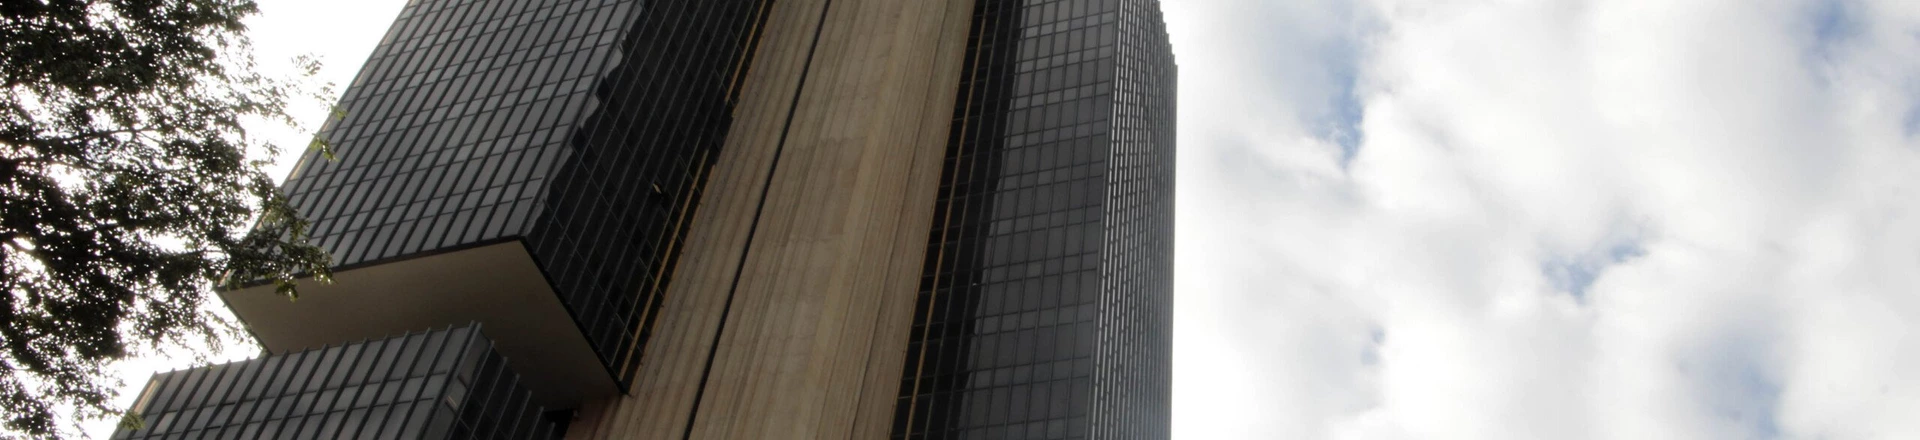 BRASÍLIA, DF, 17.05.2016: BANCO-CENTRAL - Sede do Banco Central do Brasil em Brasília. (Foto: Claudio Reis/Eleven/Folhapress)